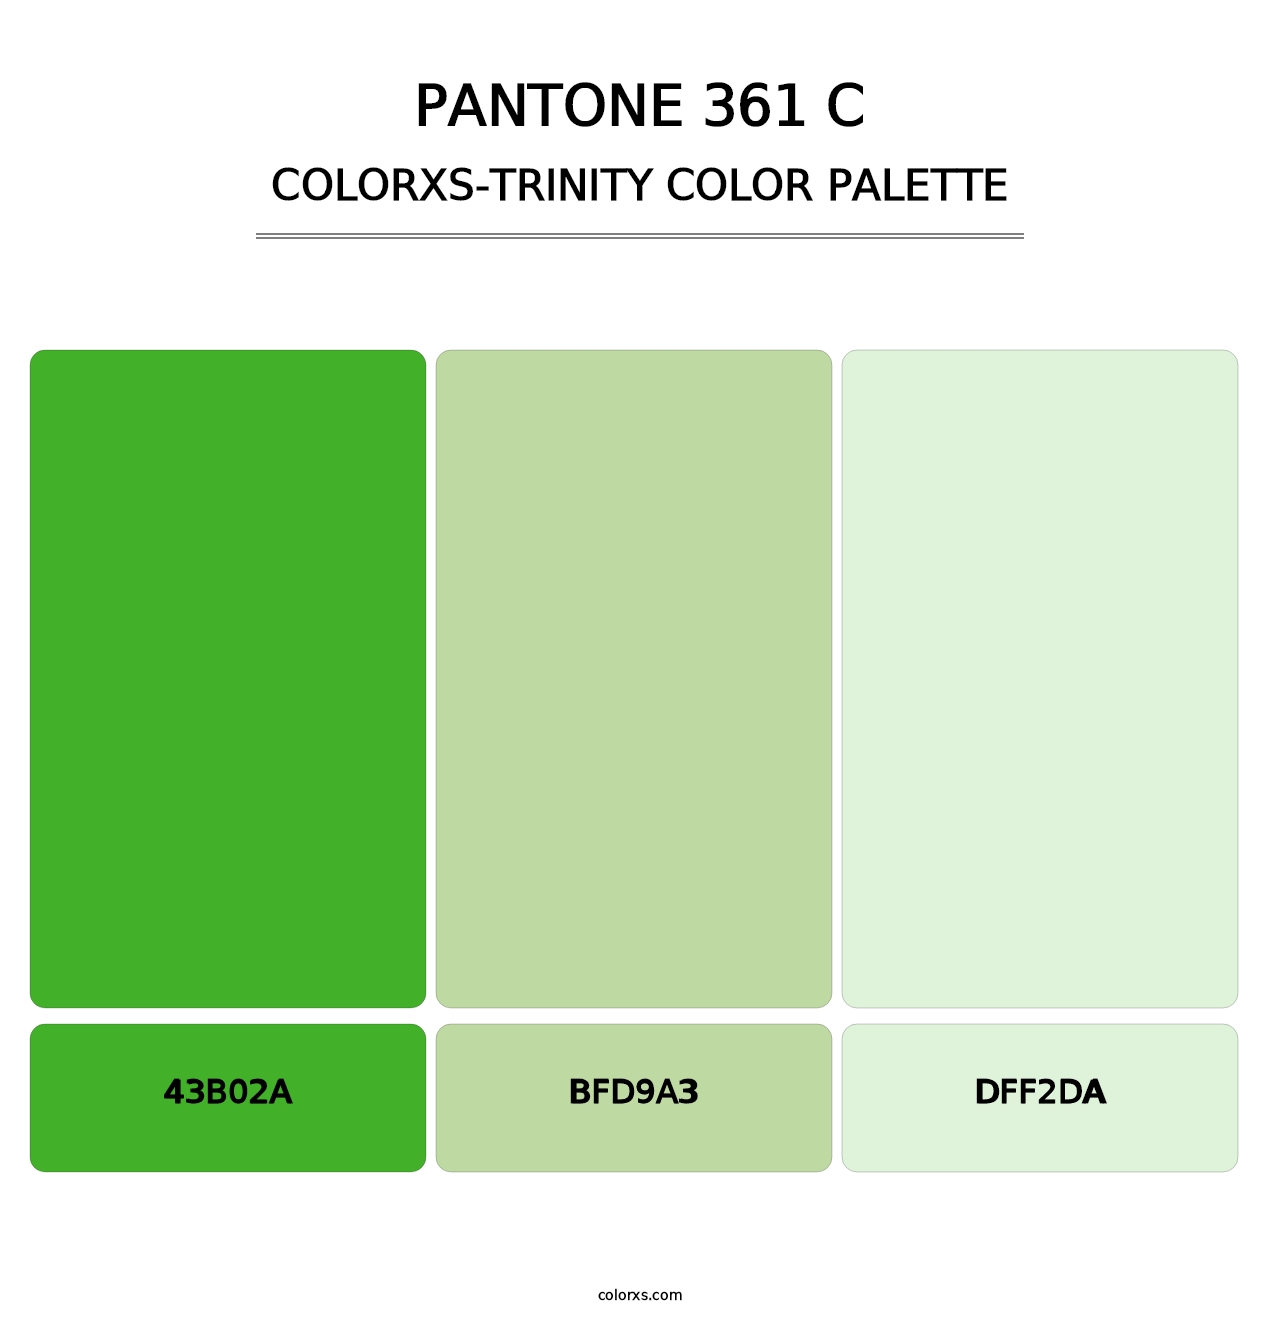 PANTONE 361 C - Colorxs Trinity Palette